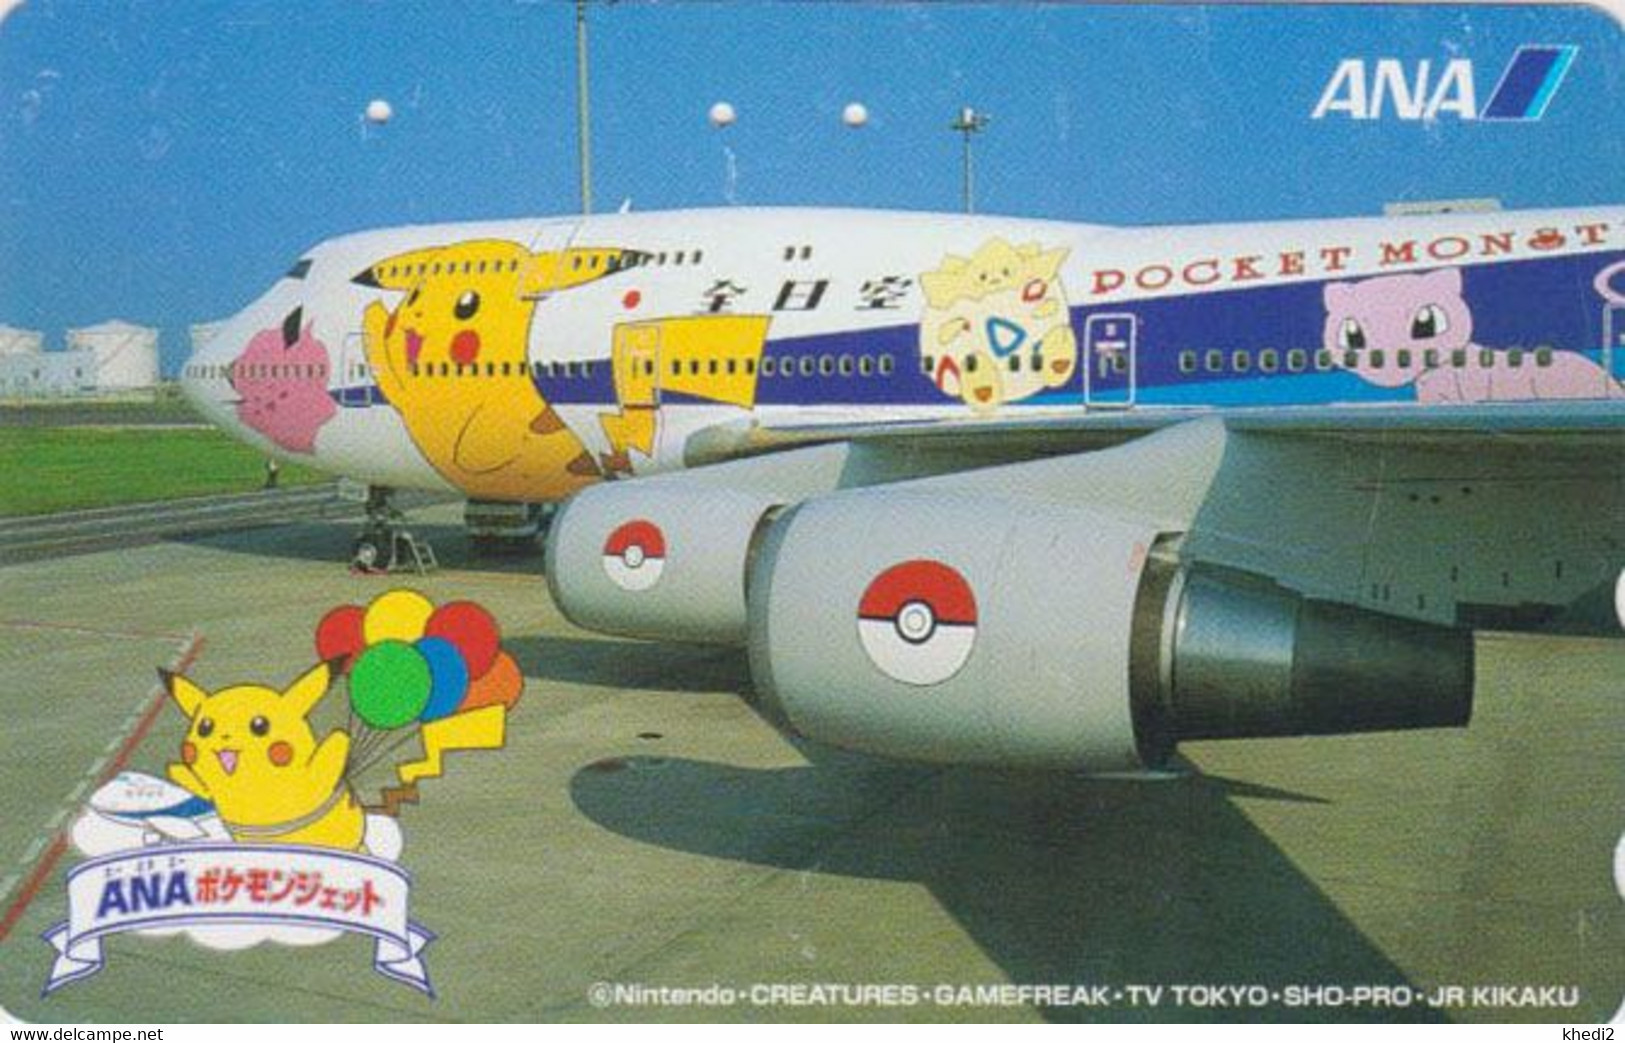 Télécarte JAPON / 110-016  - MANGA - NINTENDO POKEMON AVION ANA  - BALLOON & PLANE JAPAN Phonecard  - 19793 - Avions